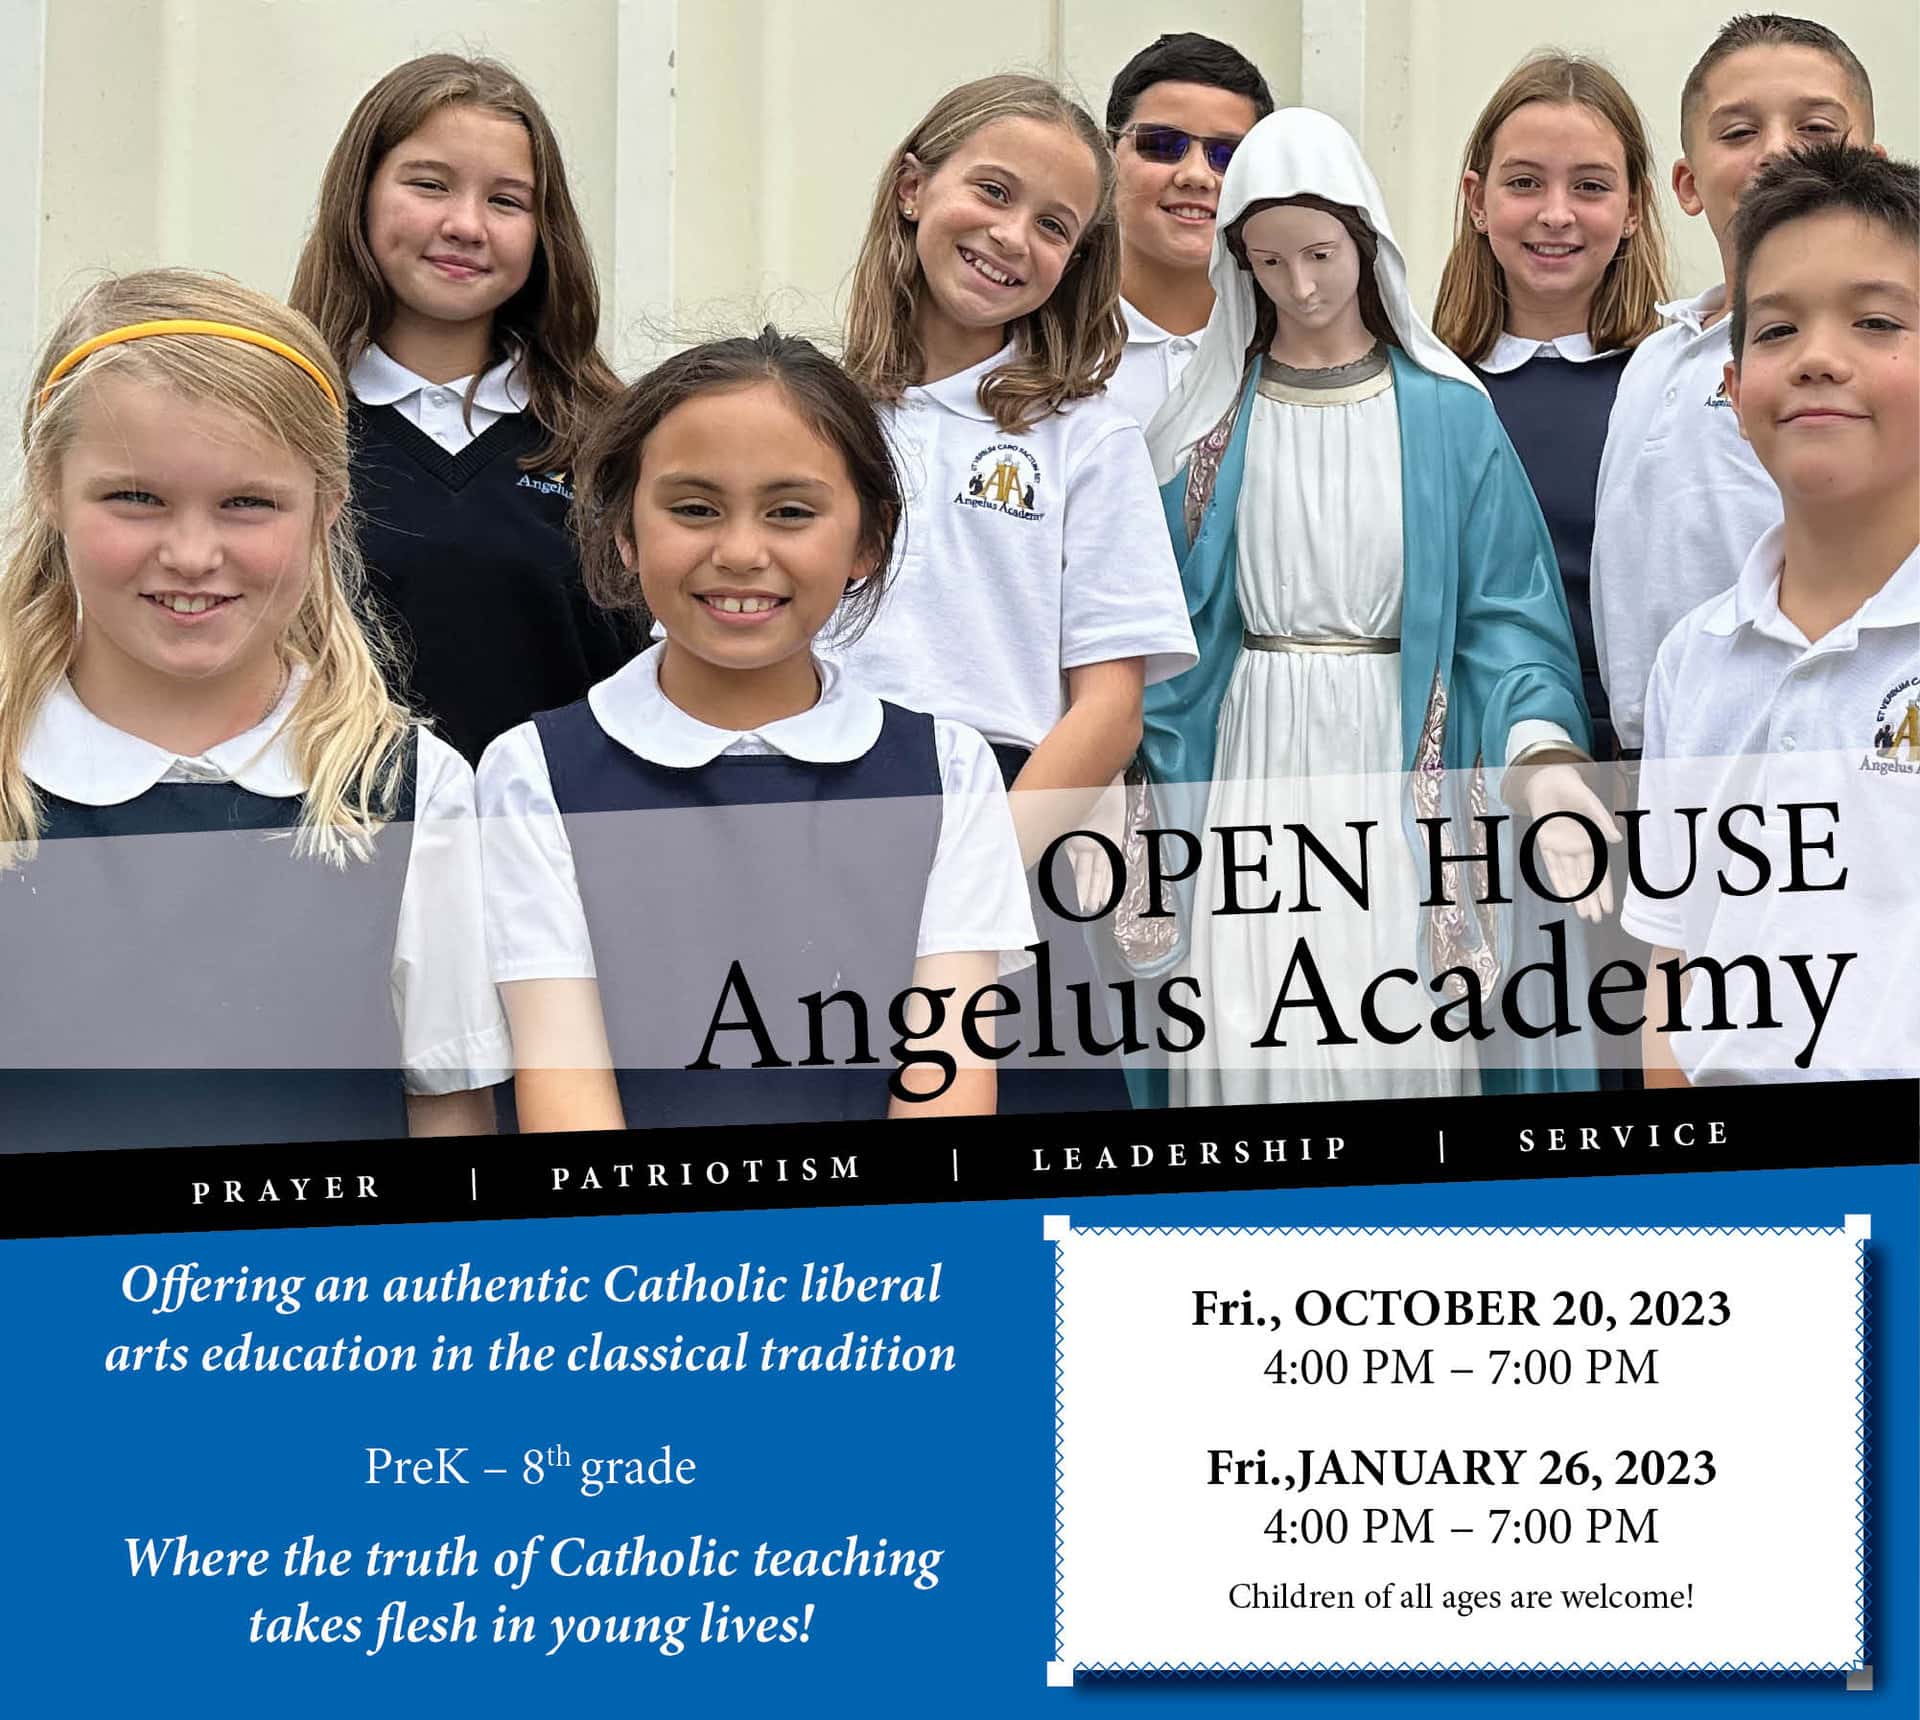 Welcome to Angelus Academy!